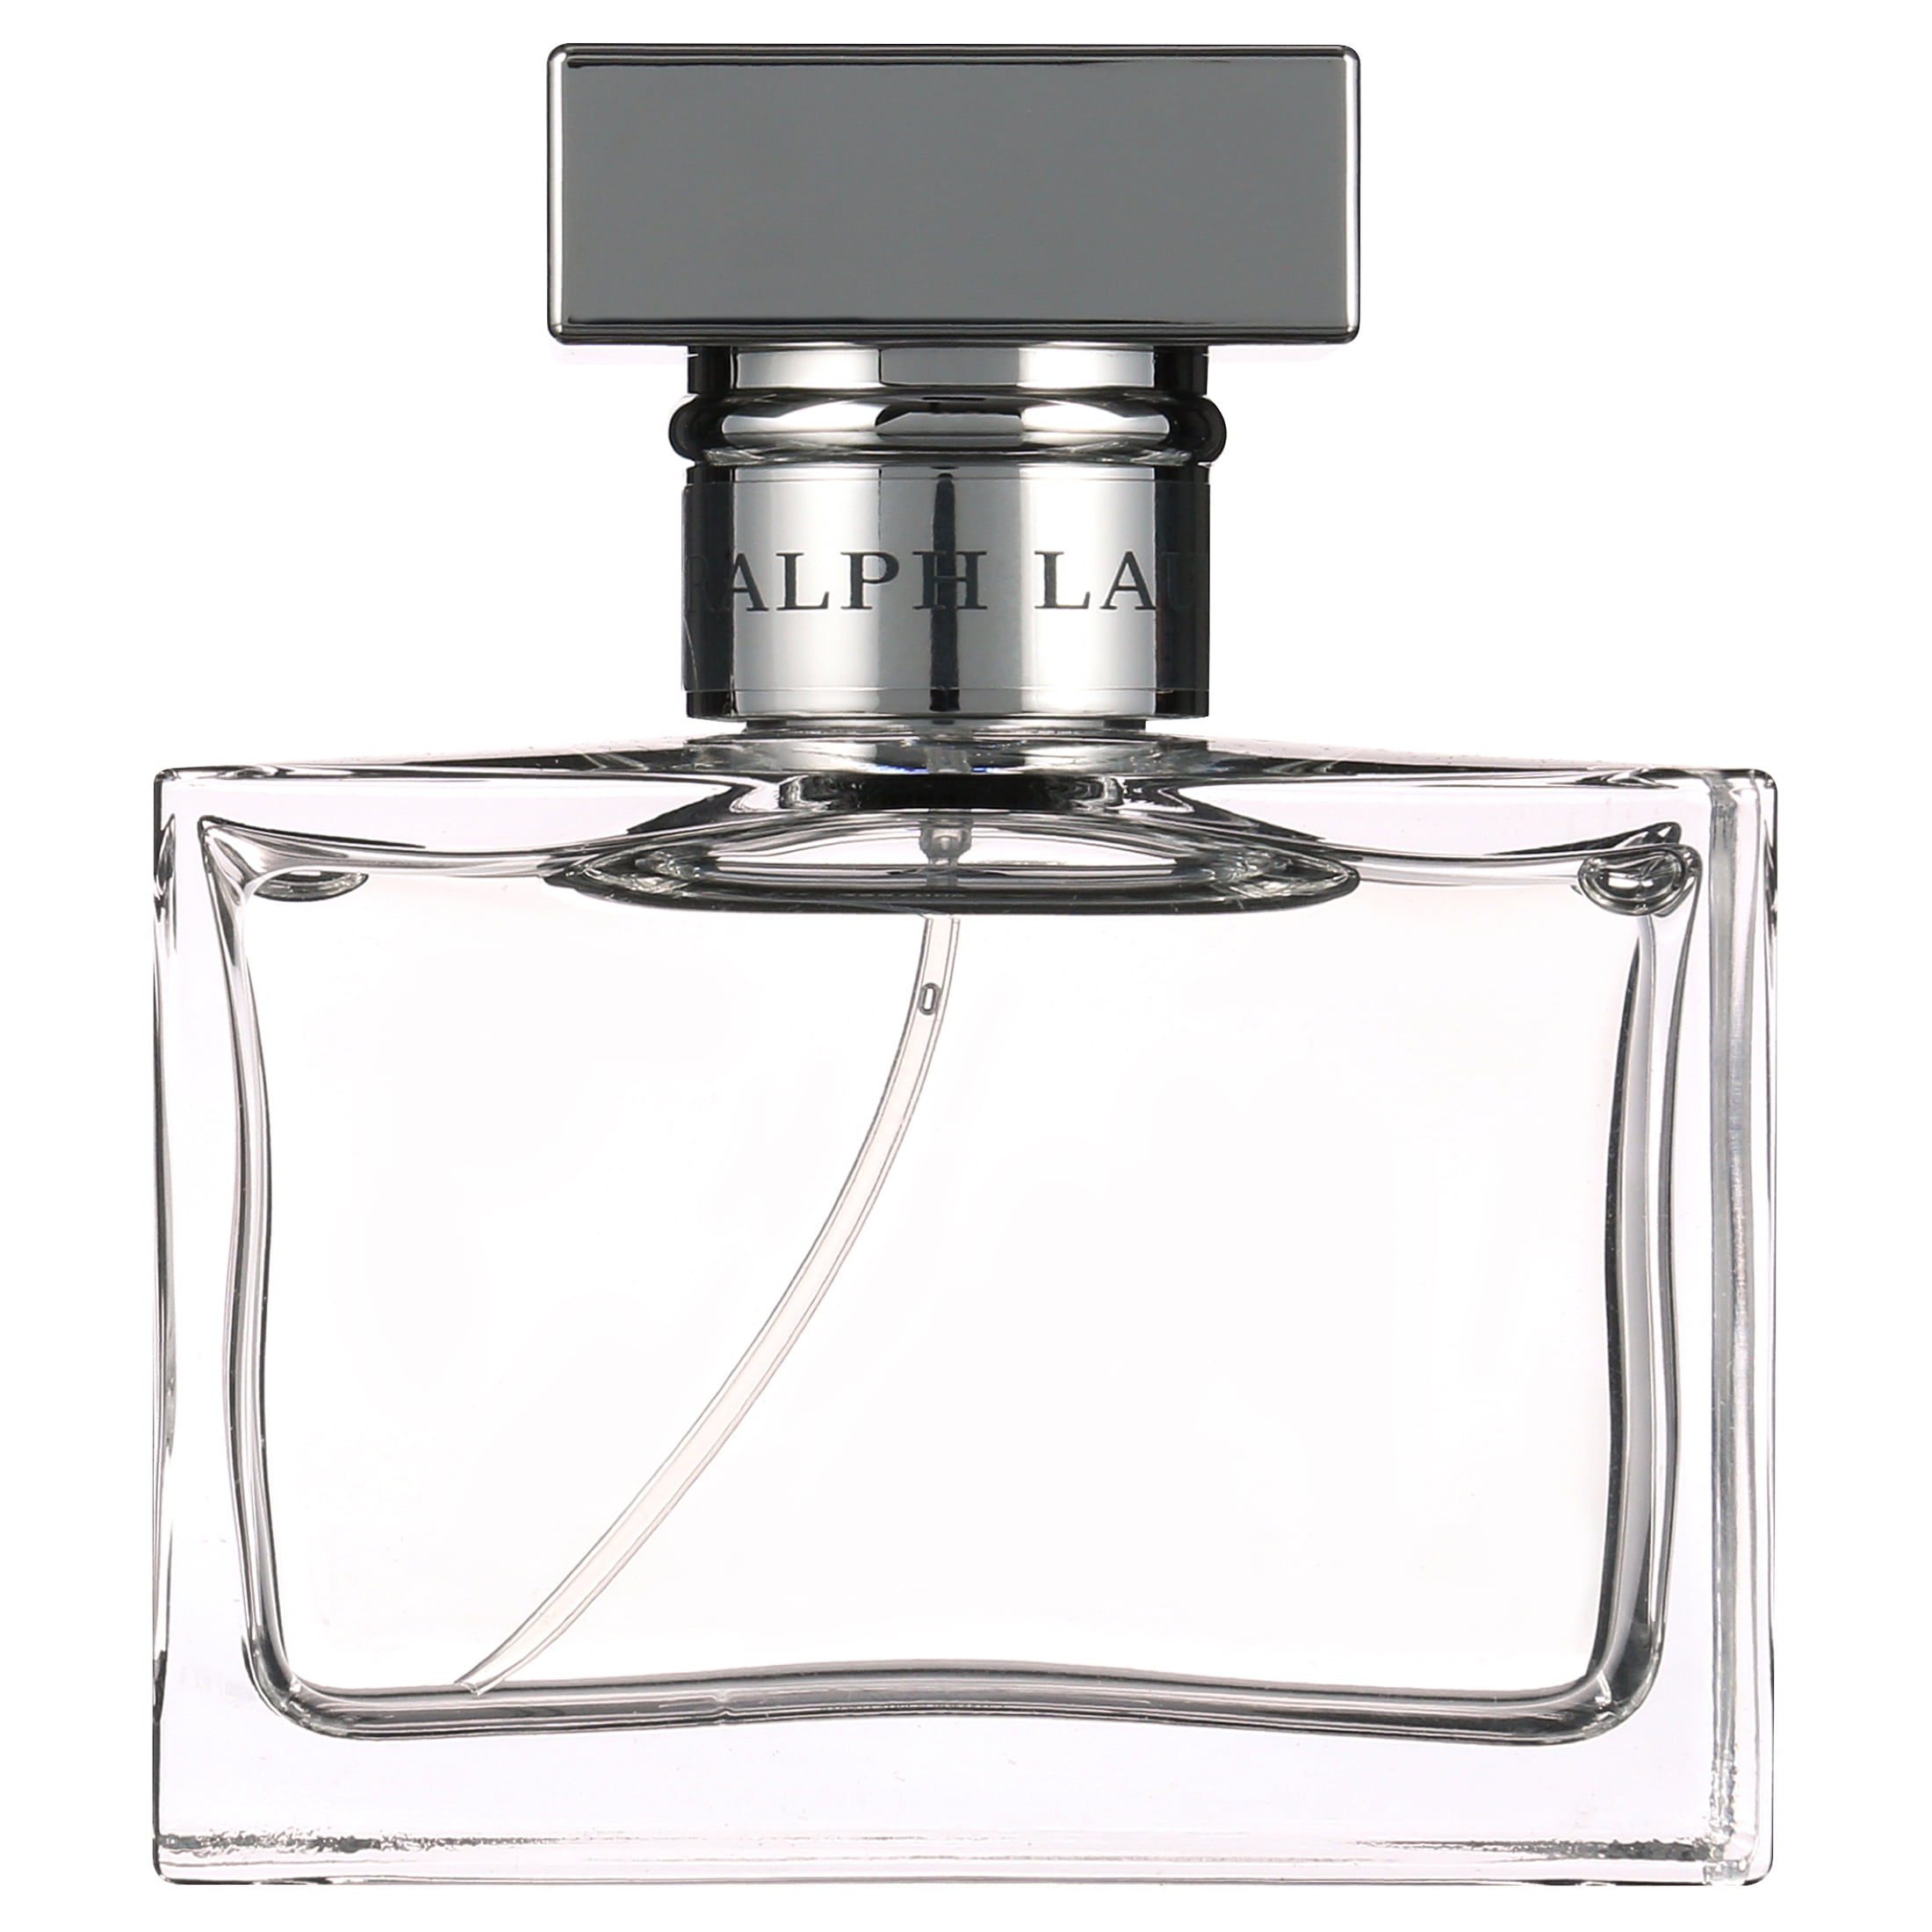 Ralph Lauren Romance Parfum Spray 30ml/1oz 30ml/1oz buy in United States  with free shipping CosmoStore